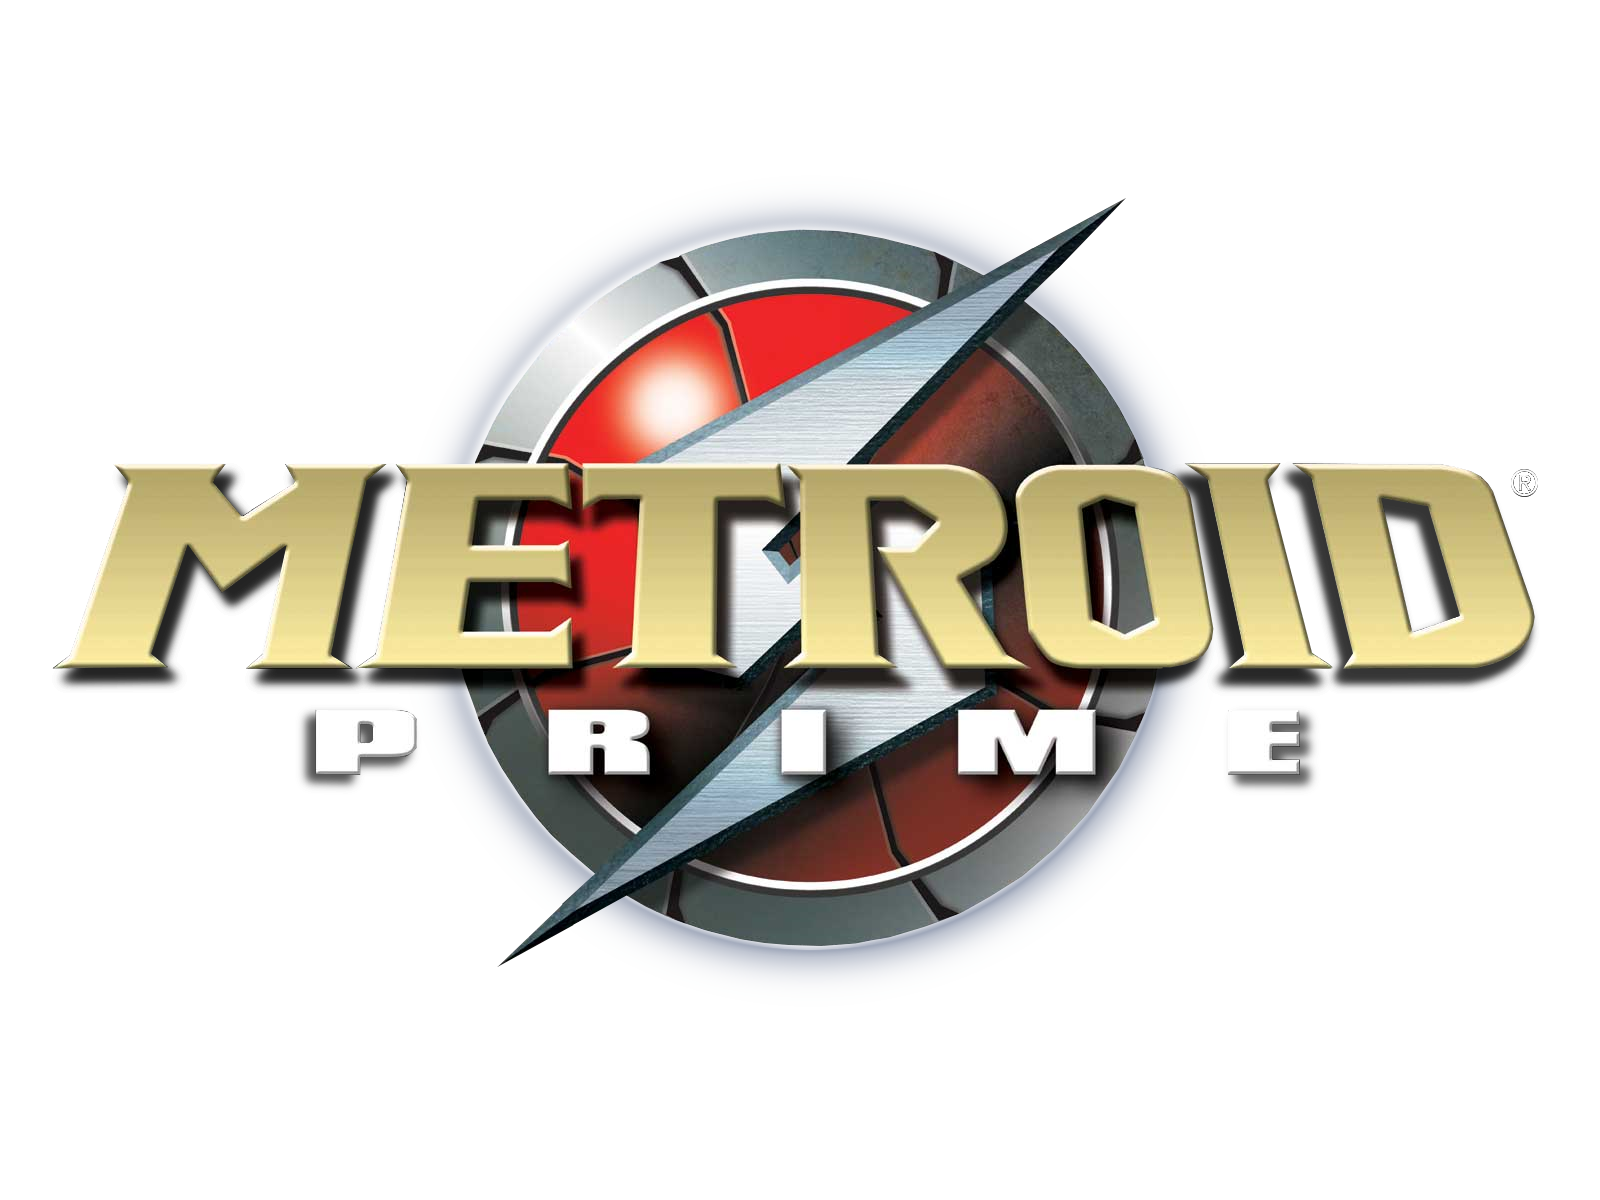 metroid prime remastered chances